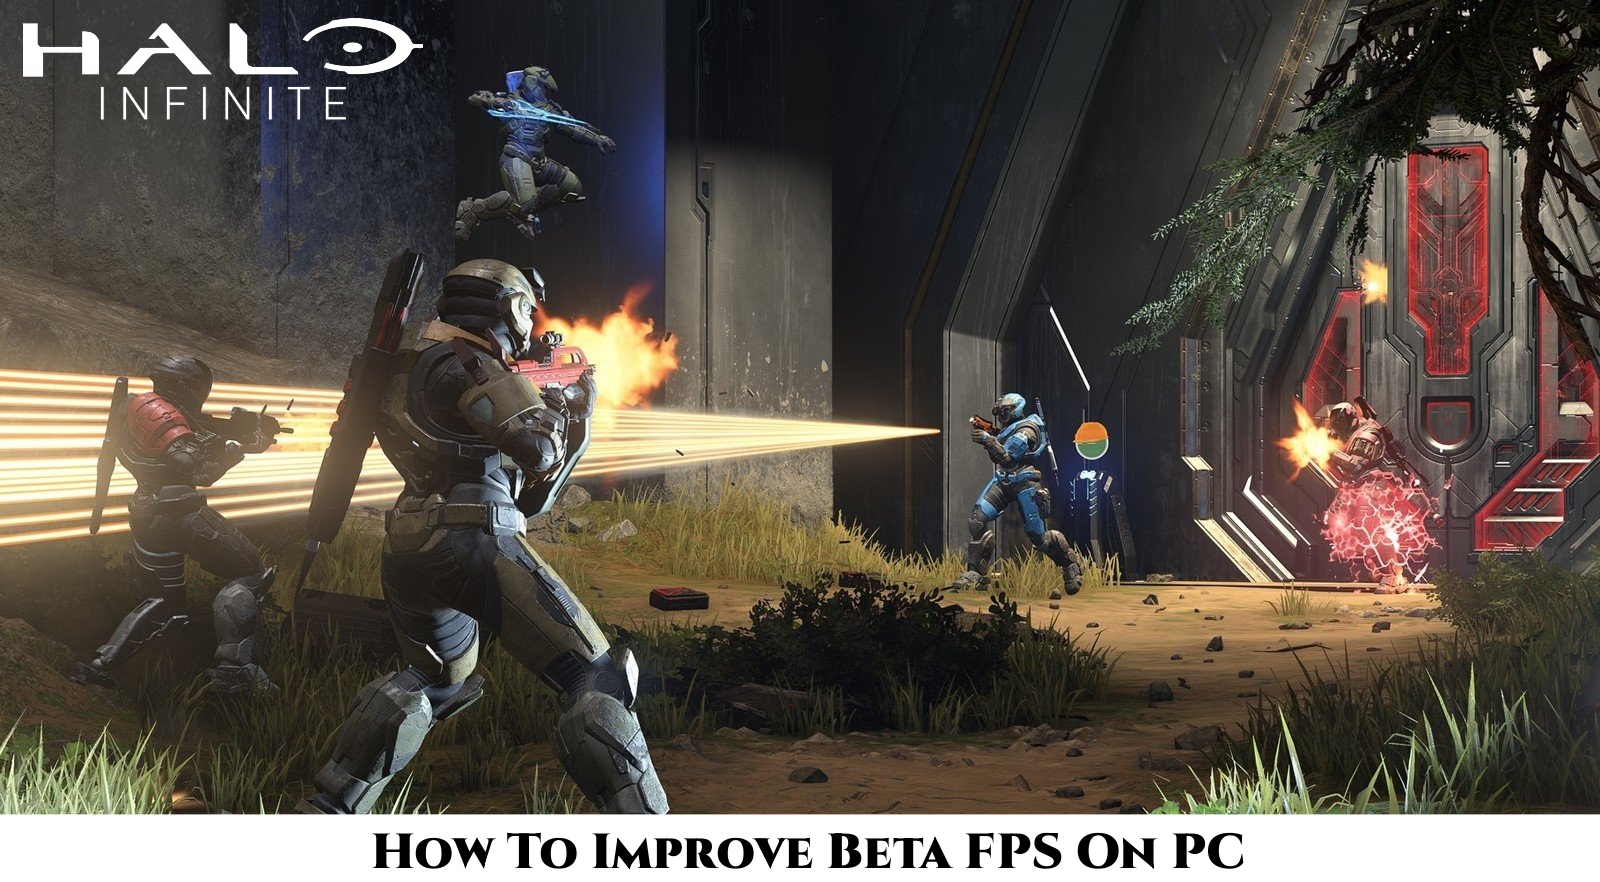 How To Improve Halo Infinite Beta FPS On PC